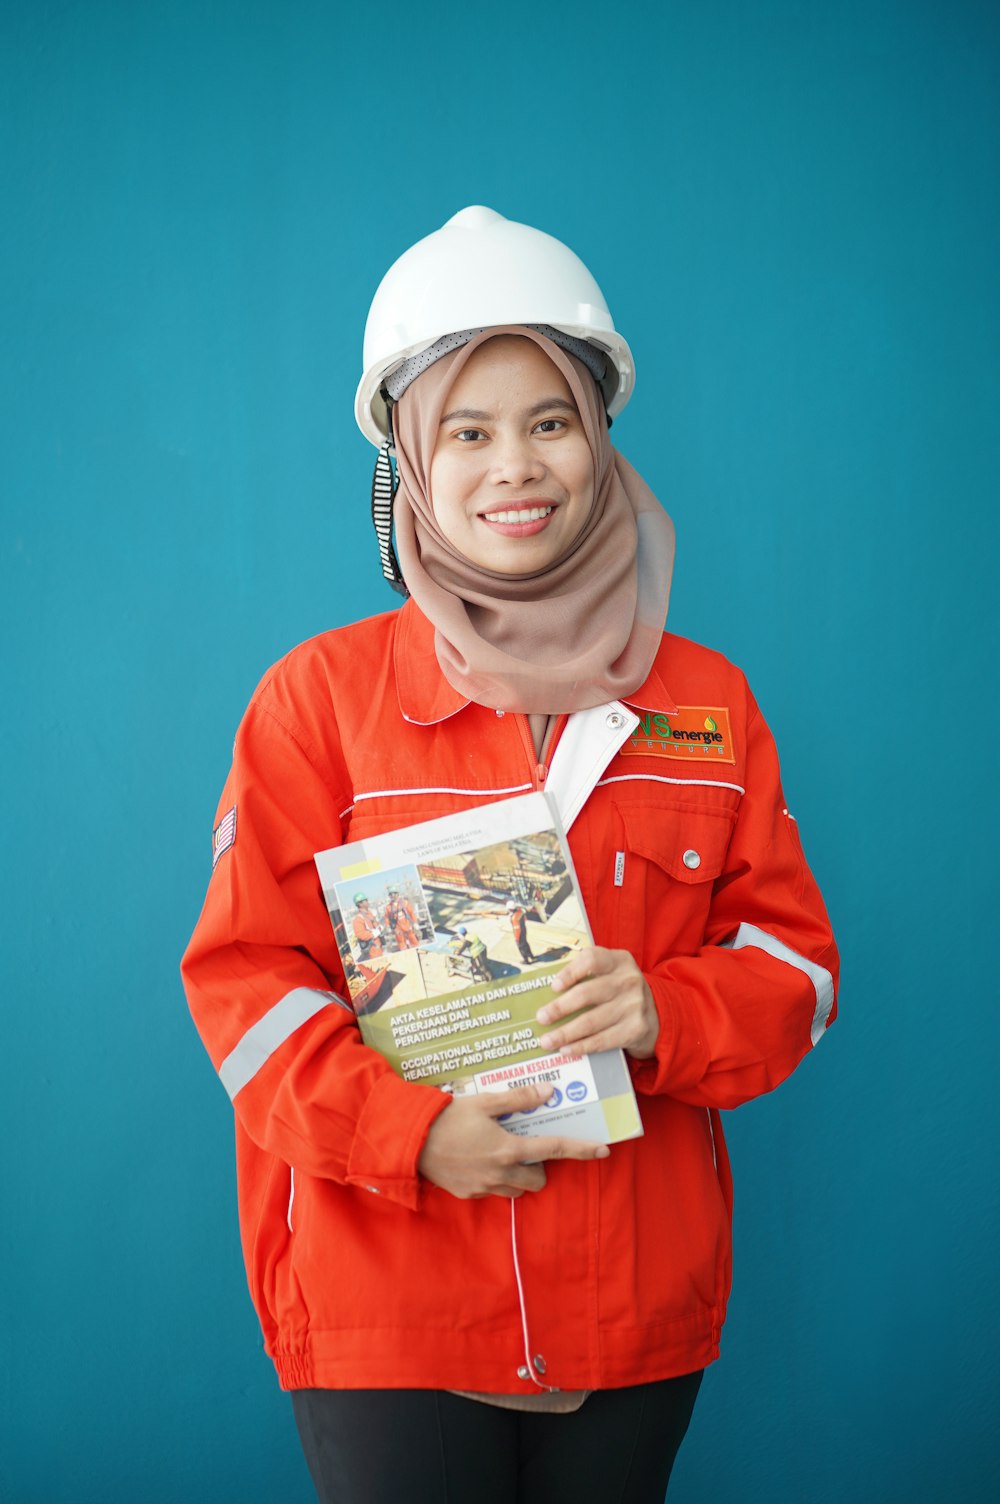 Una mujer con un casco sosteniendo una revista